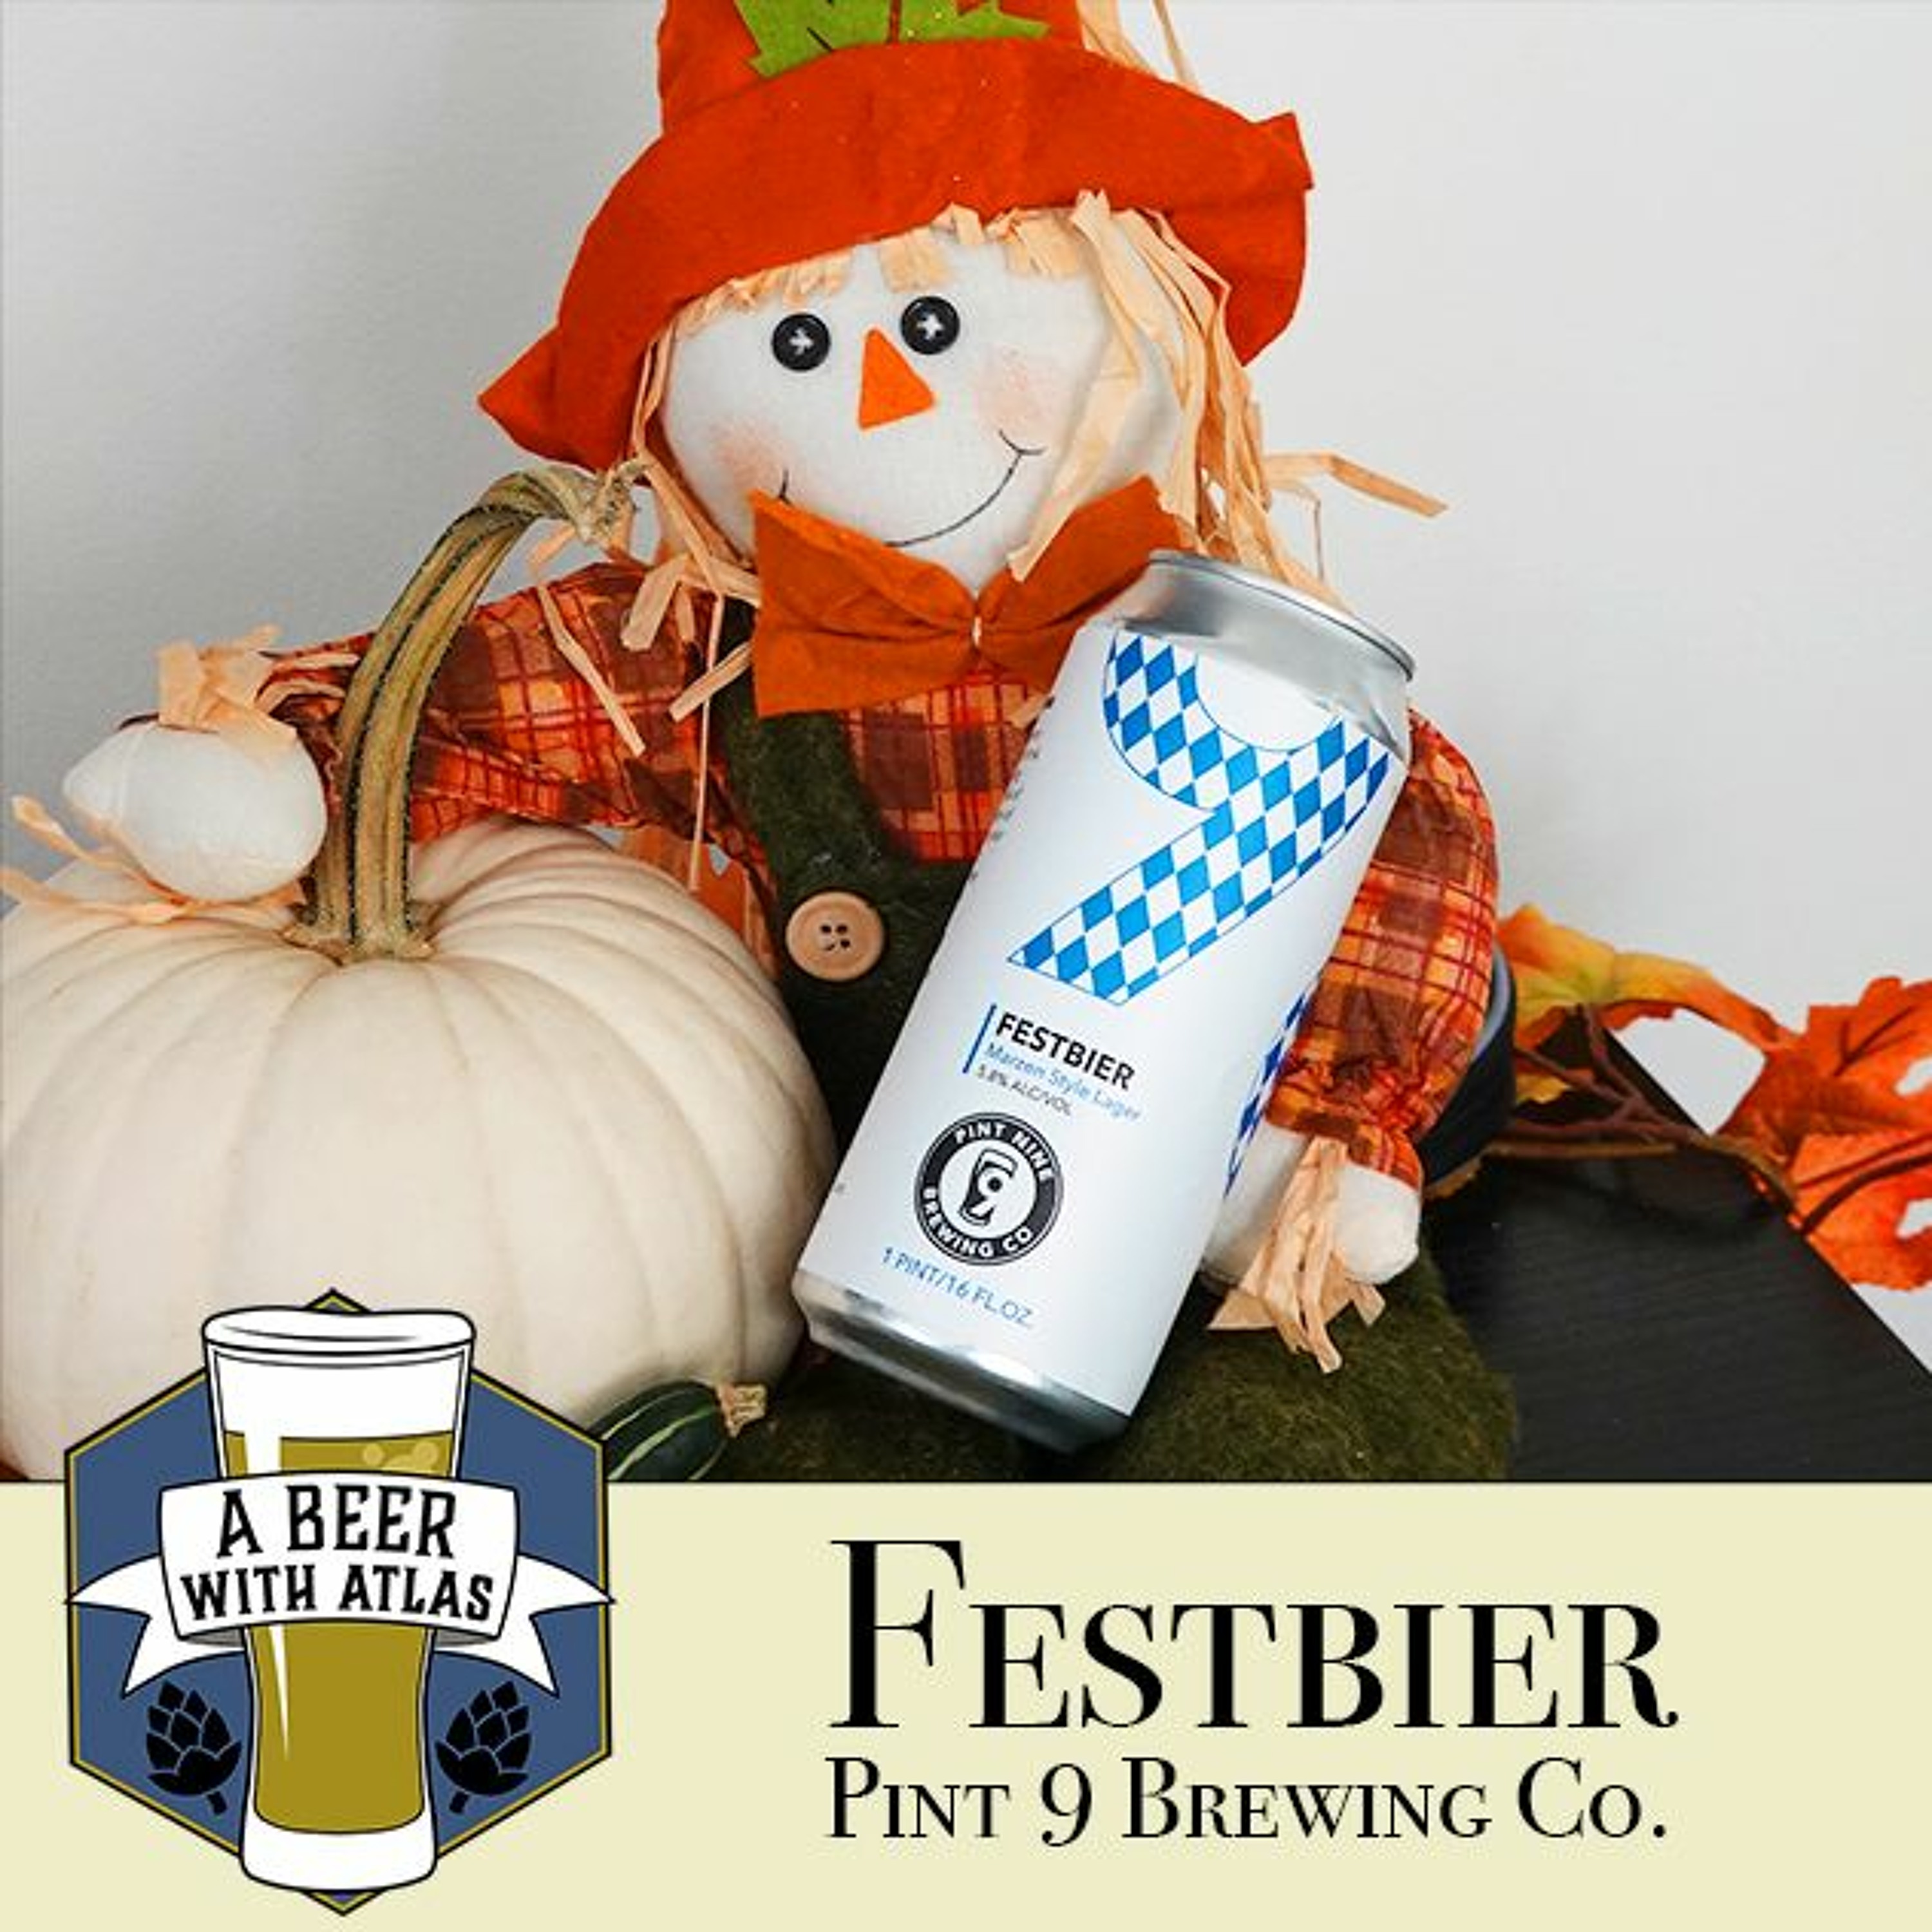 Festbier Pint 9 Brewing Company - Oktoberfest 3 - Beer With Atlas 112